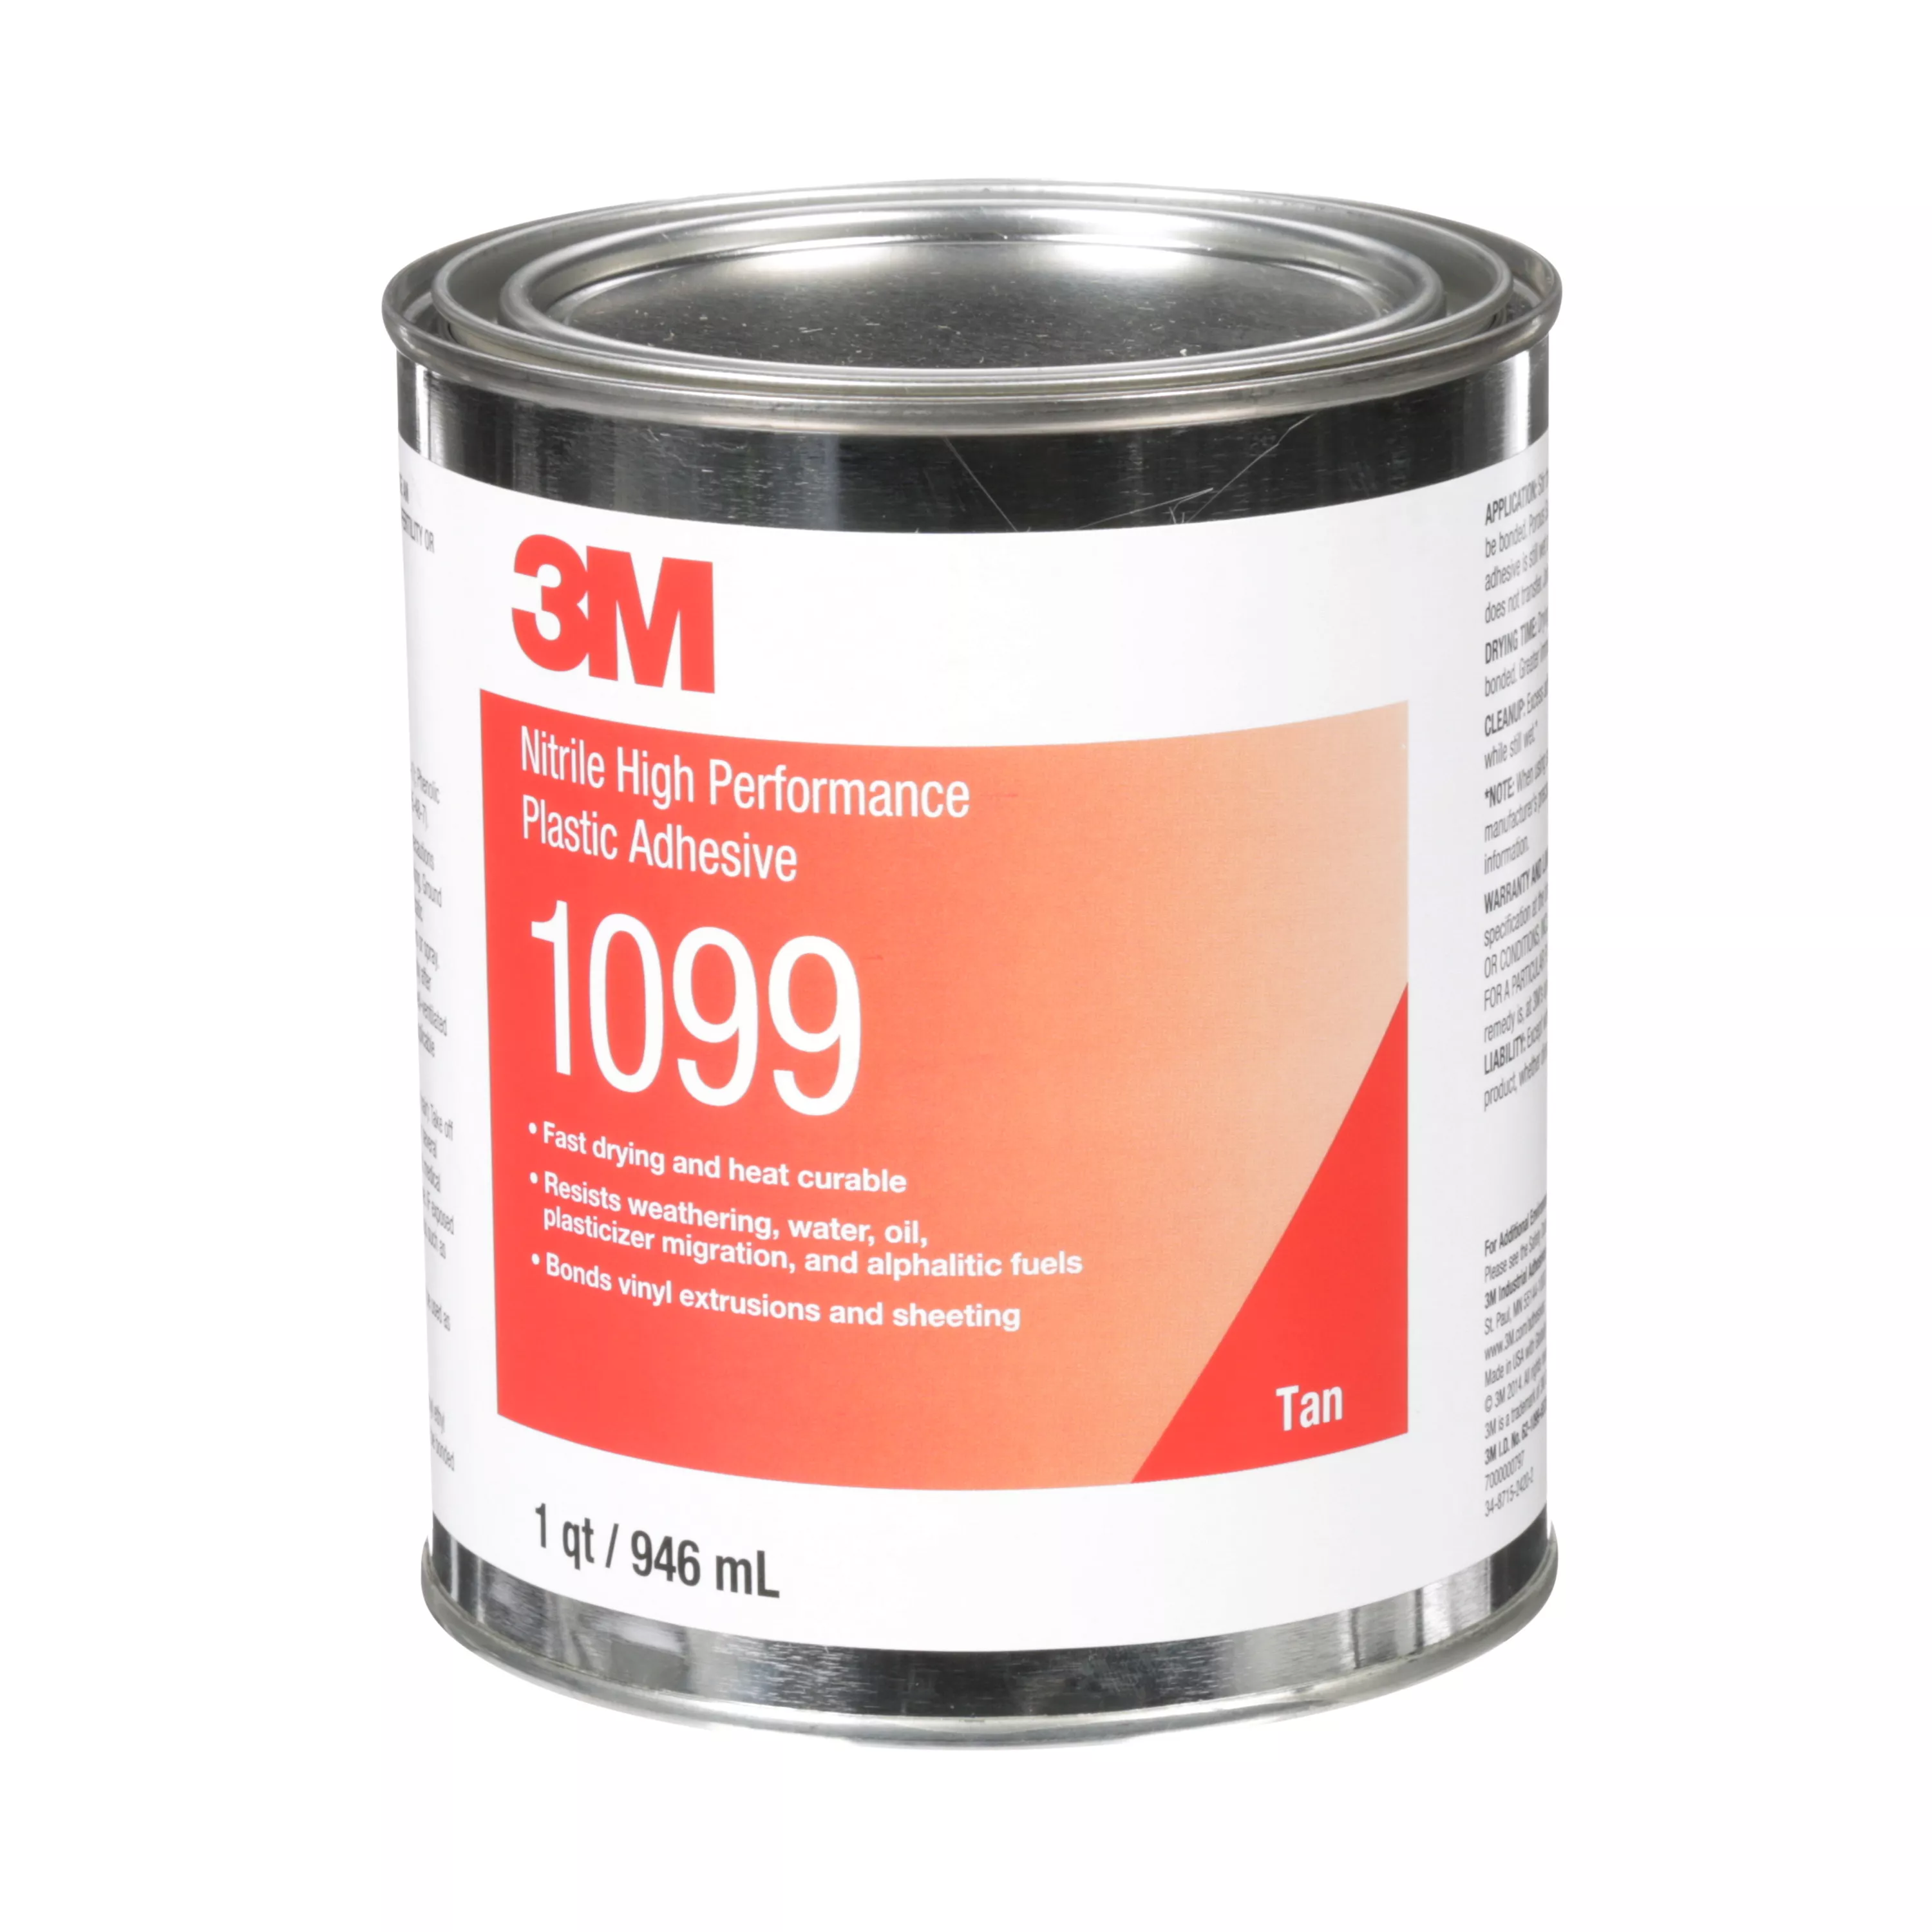 3M™ Nitrile High Performance Plastic Adhesive 1099, Tan, 1 Quart, 12
Can/Case